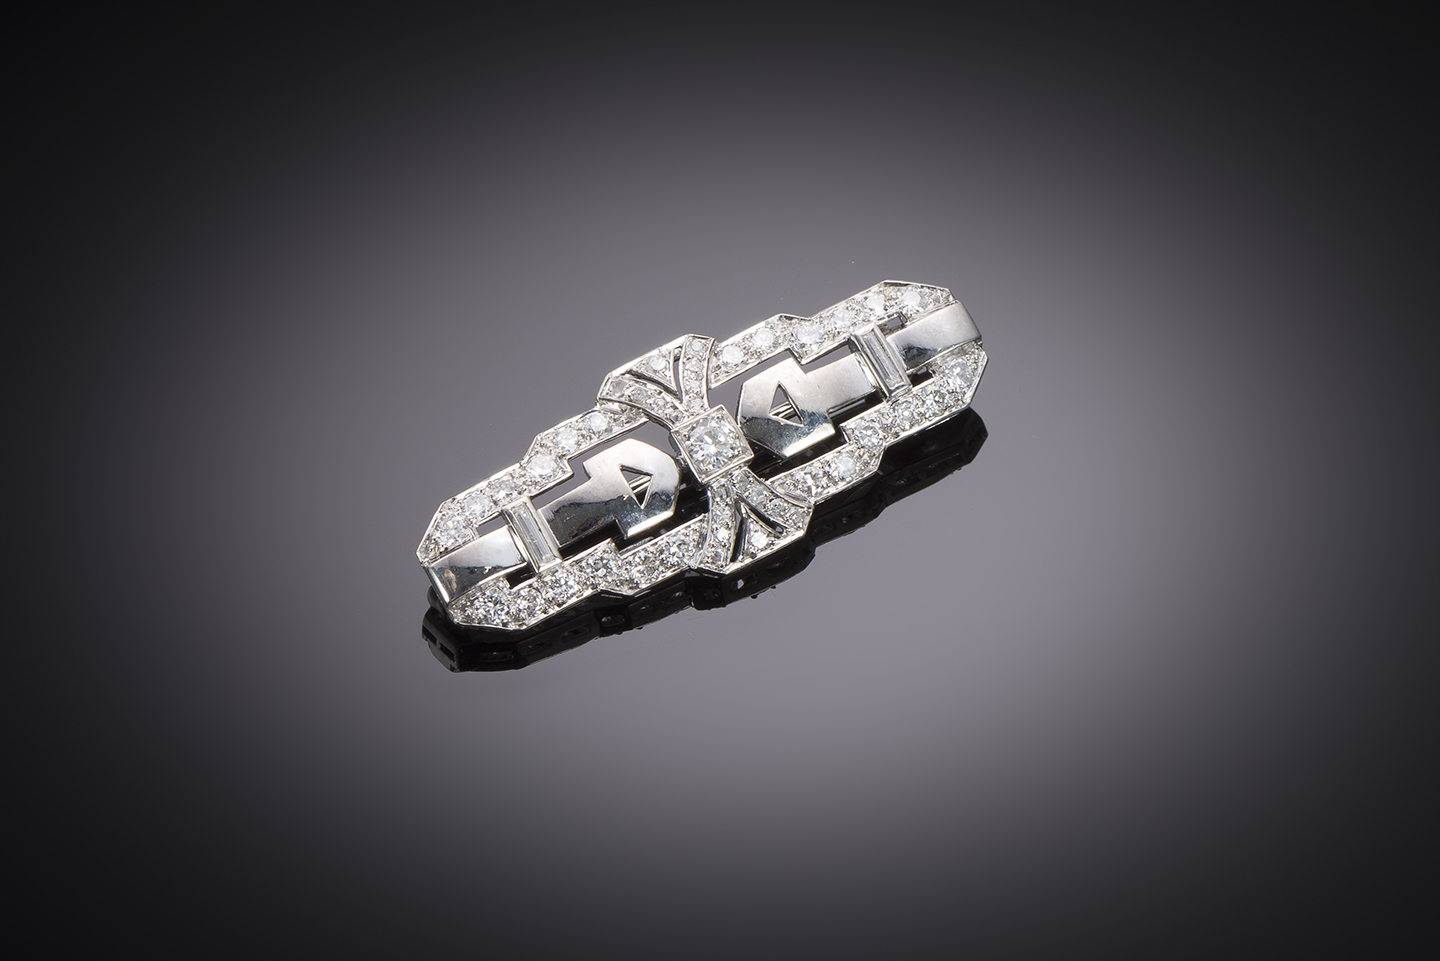 French Art Deco diamond brooch (1 carat)-1